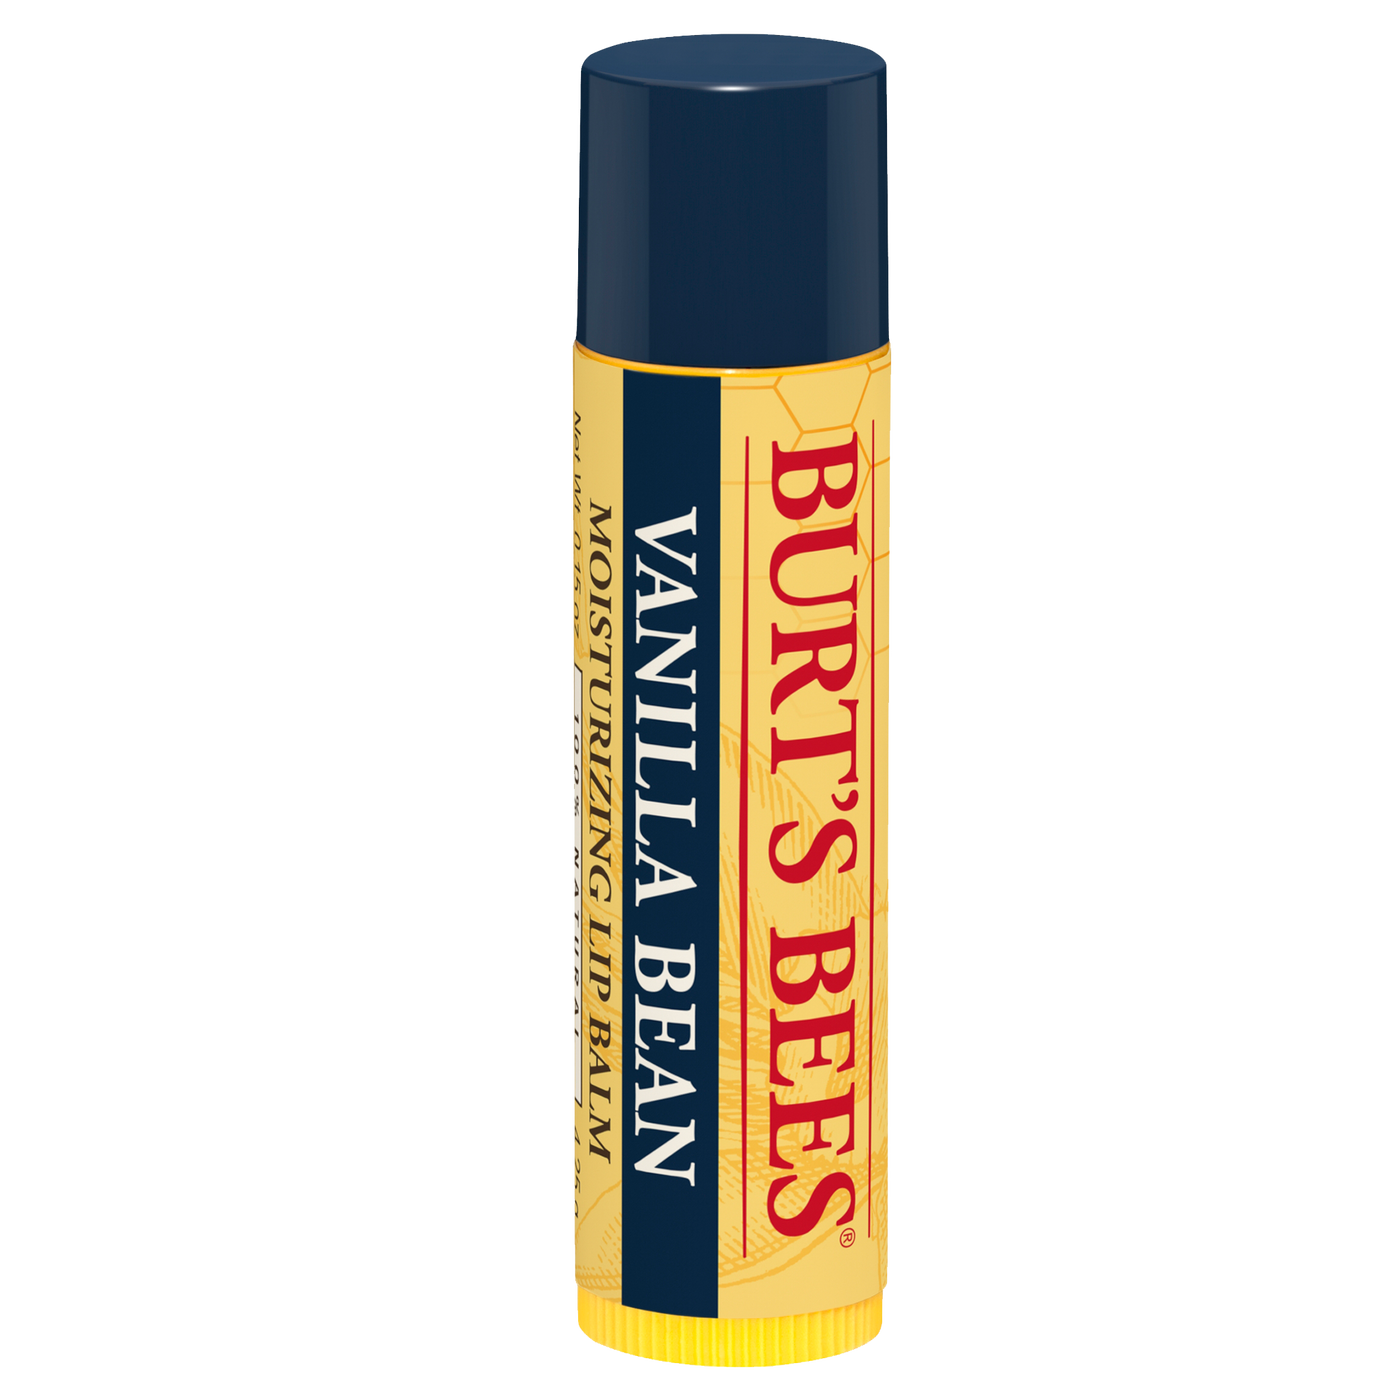 Burt's Bees Lip Balm Vanilla Bean 0.15oz Curated Wellness